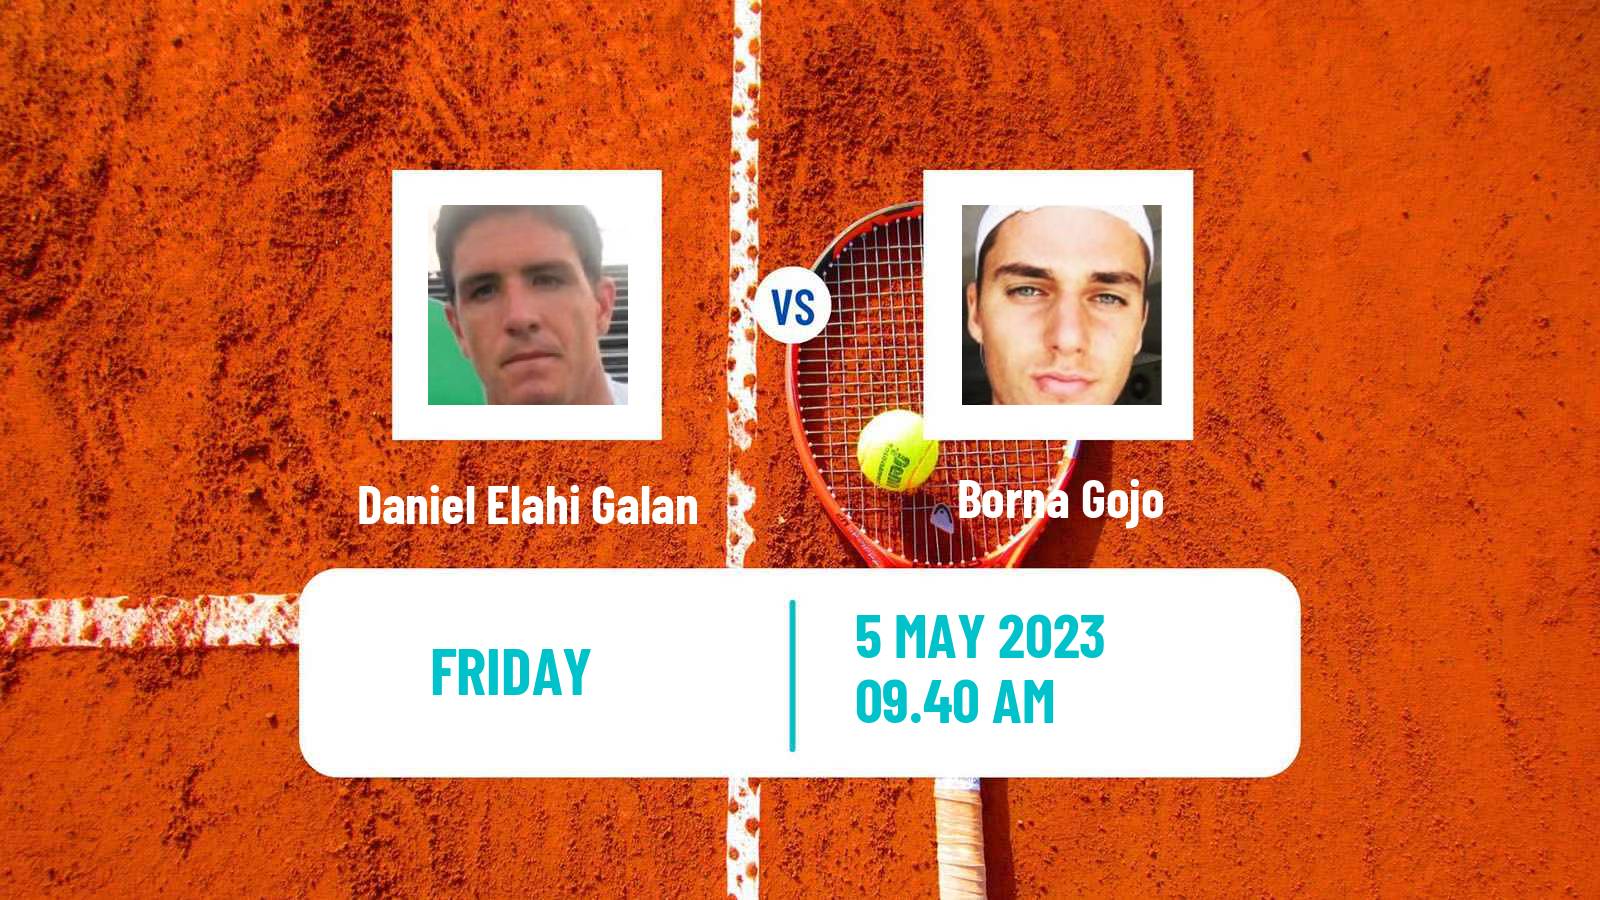 Tennis ATP Challenger Daniel Elahi Galan - Borna Gojo